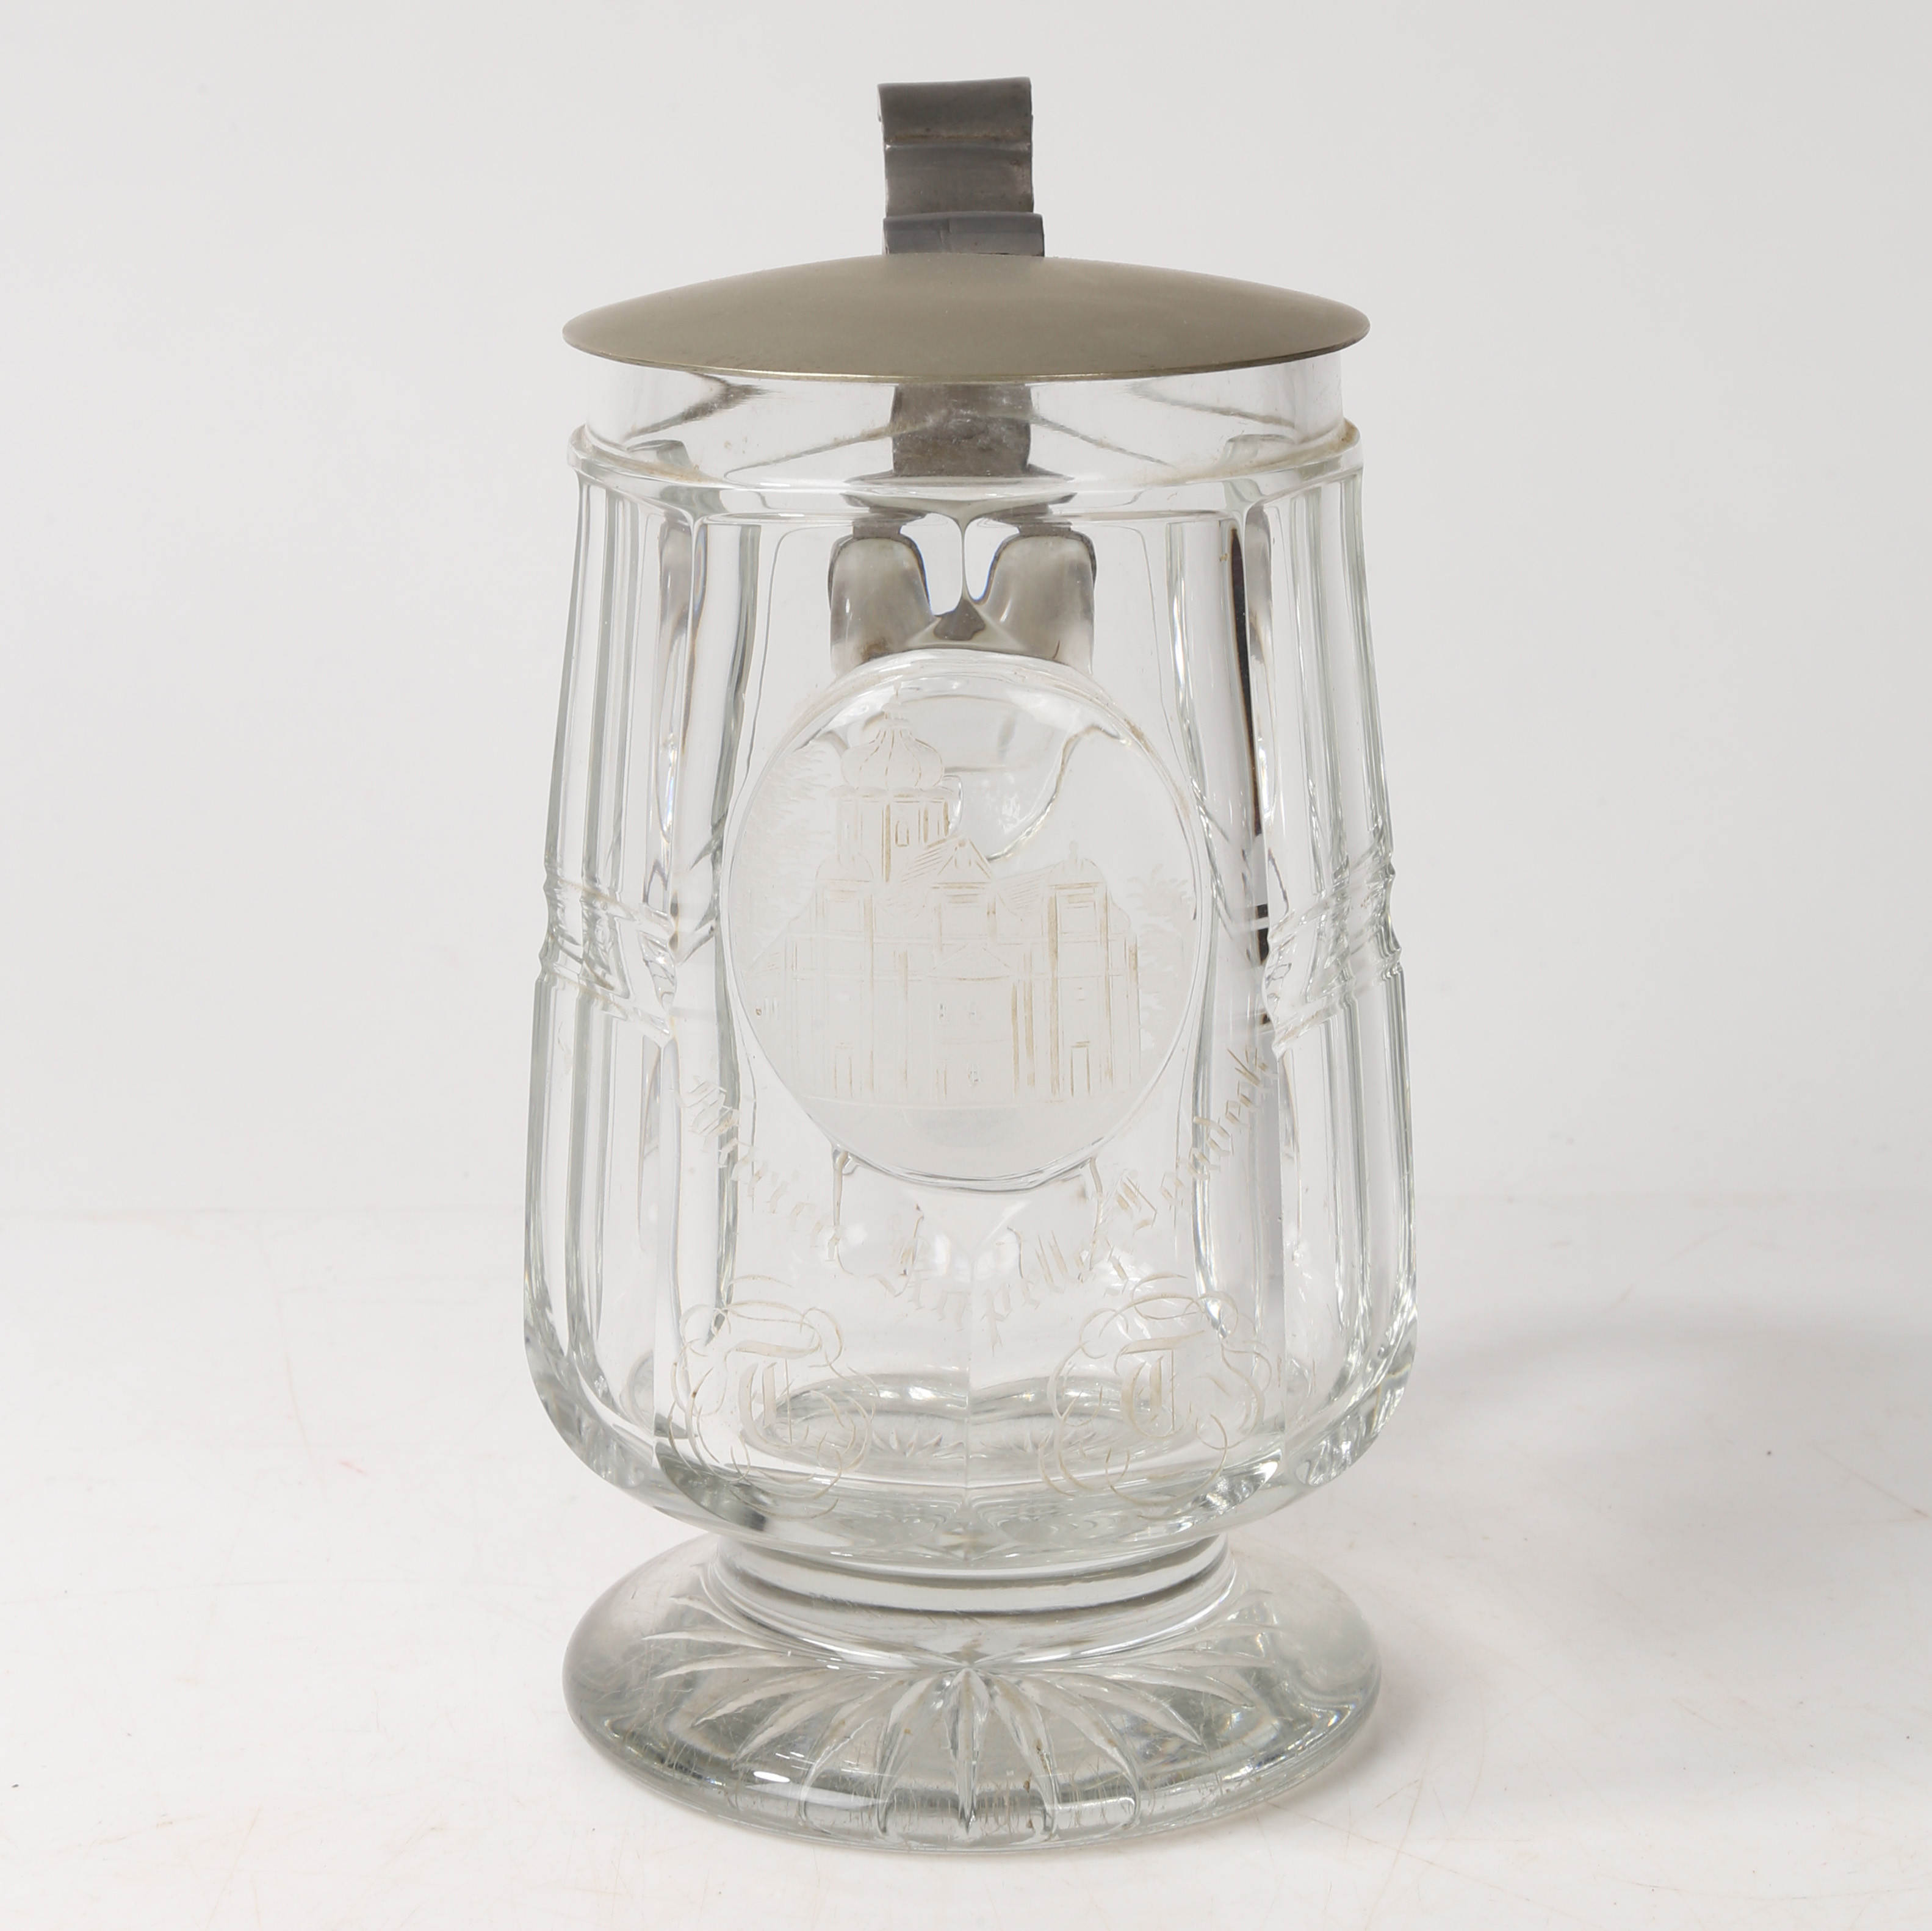 A 19TH CENTURY GERMAN GLASS TANKARD, CIRCA 1880.